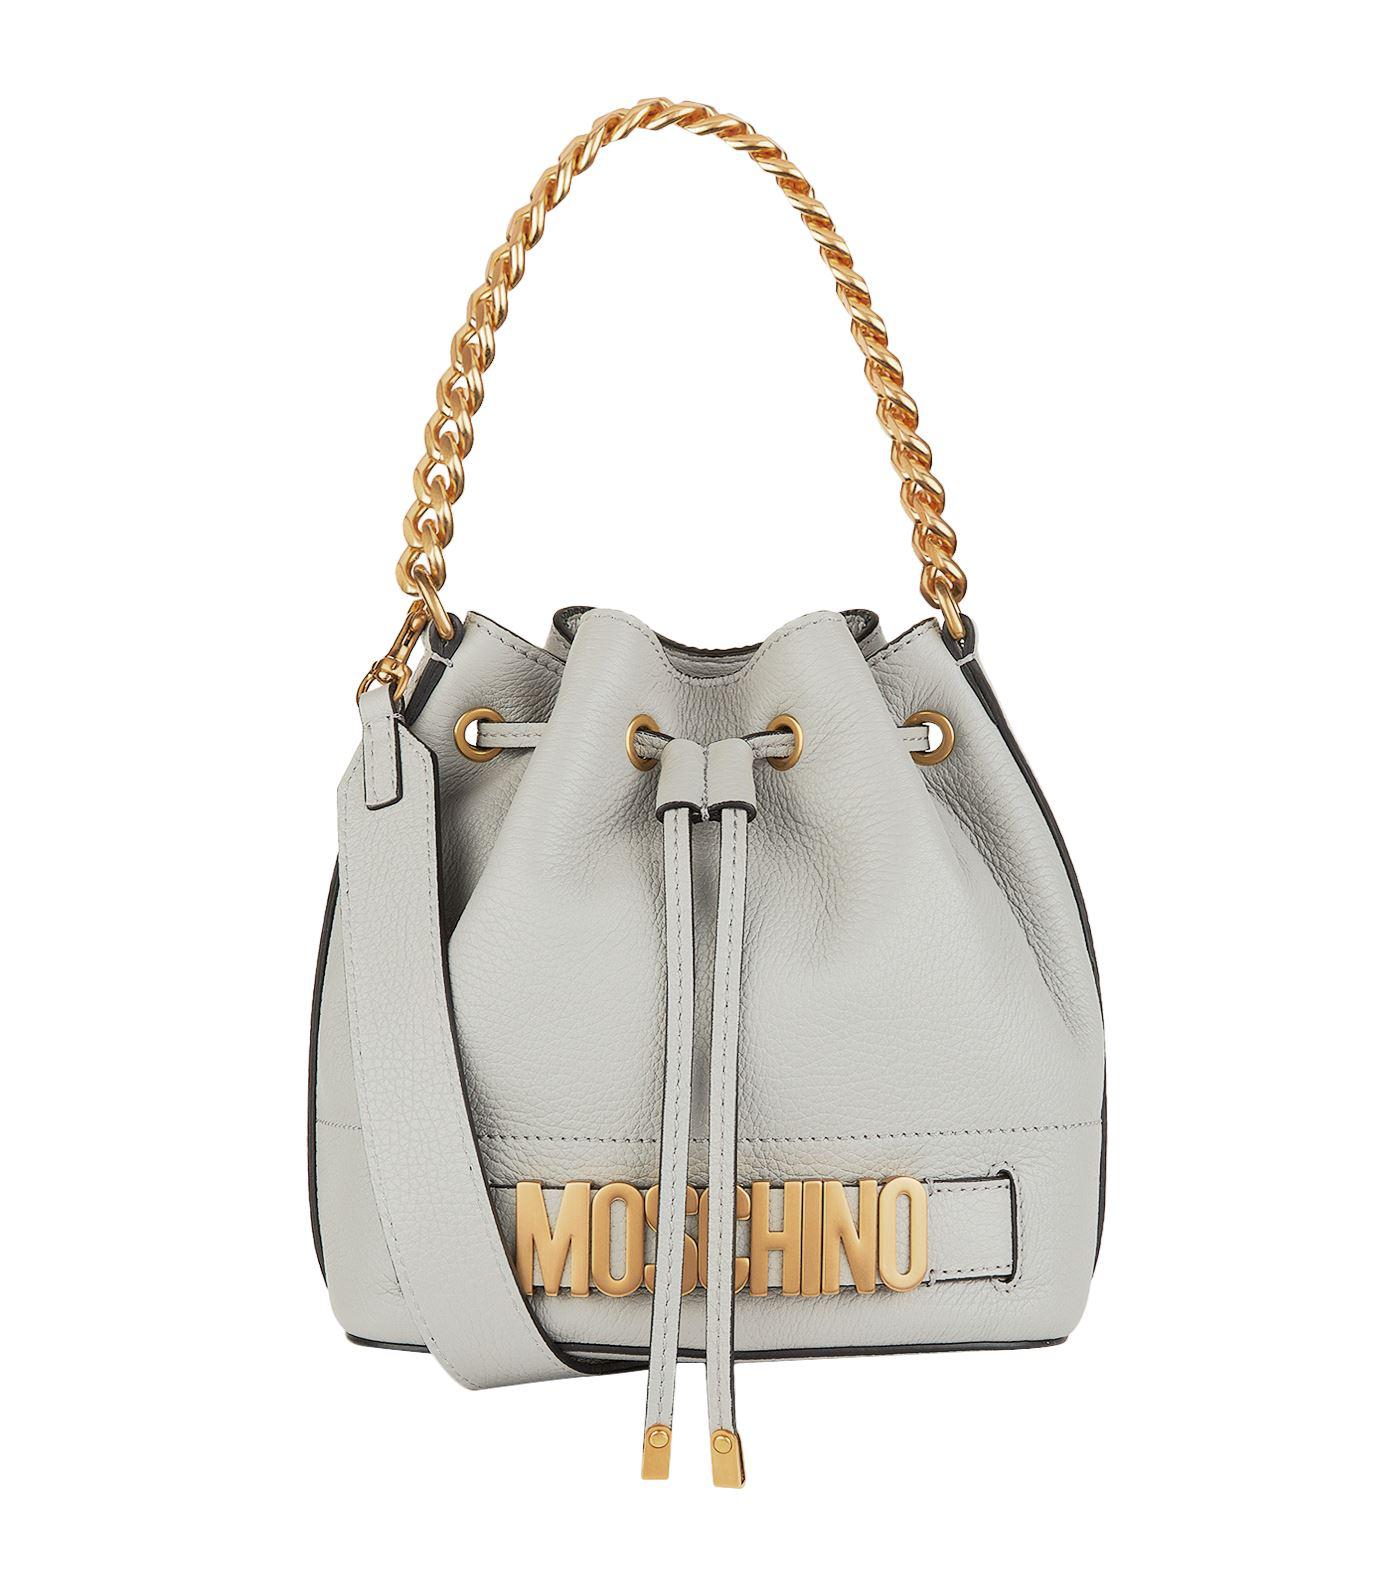 Moschino Logo Motif Bucket Bag in Gray - Lyst